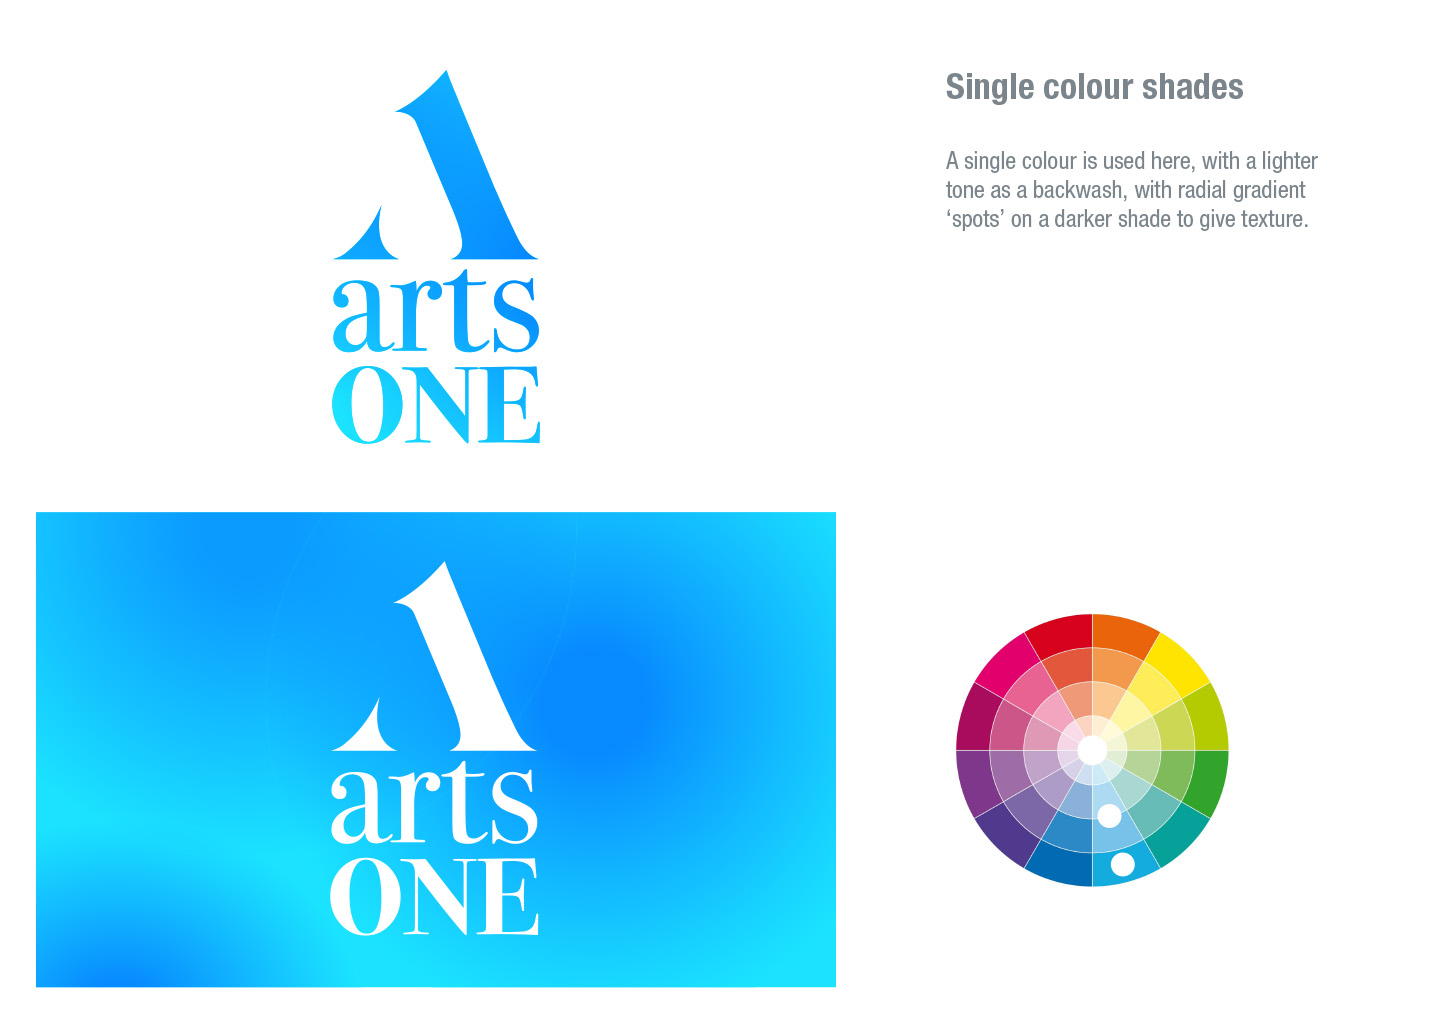 Arts1 logo colour update